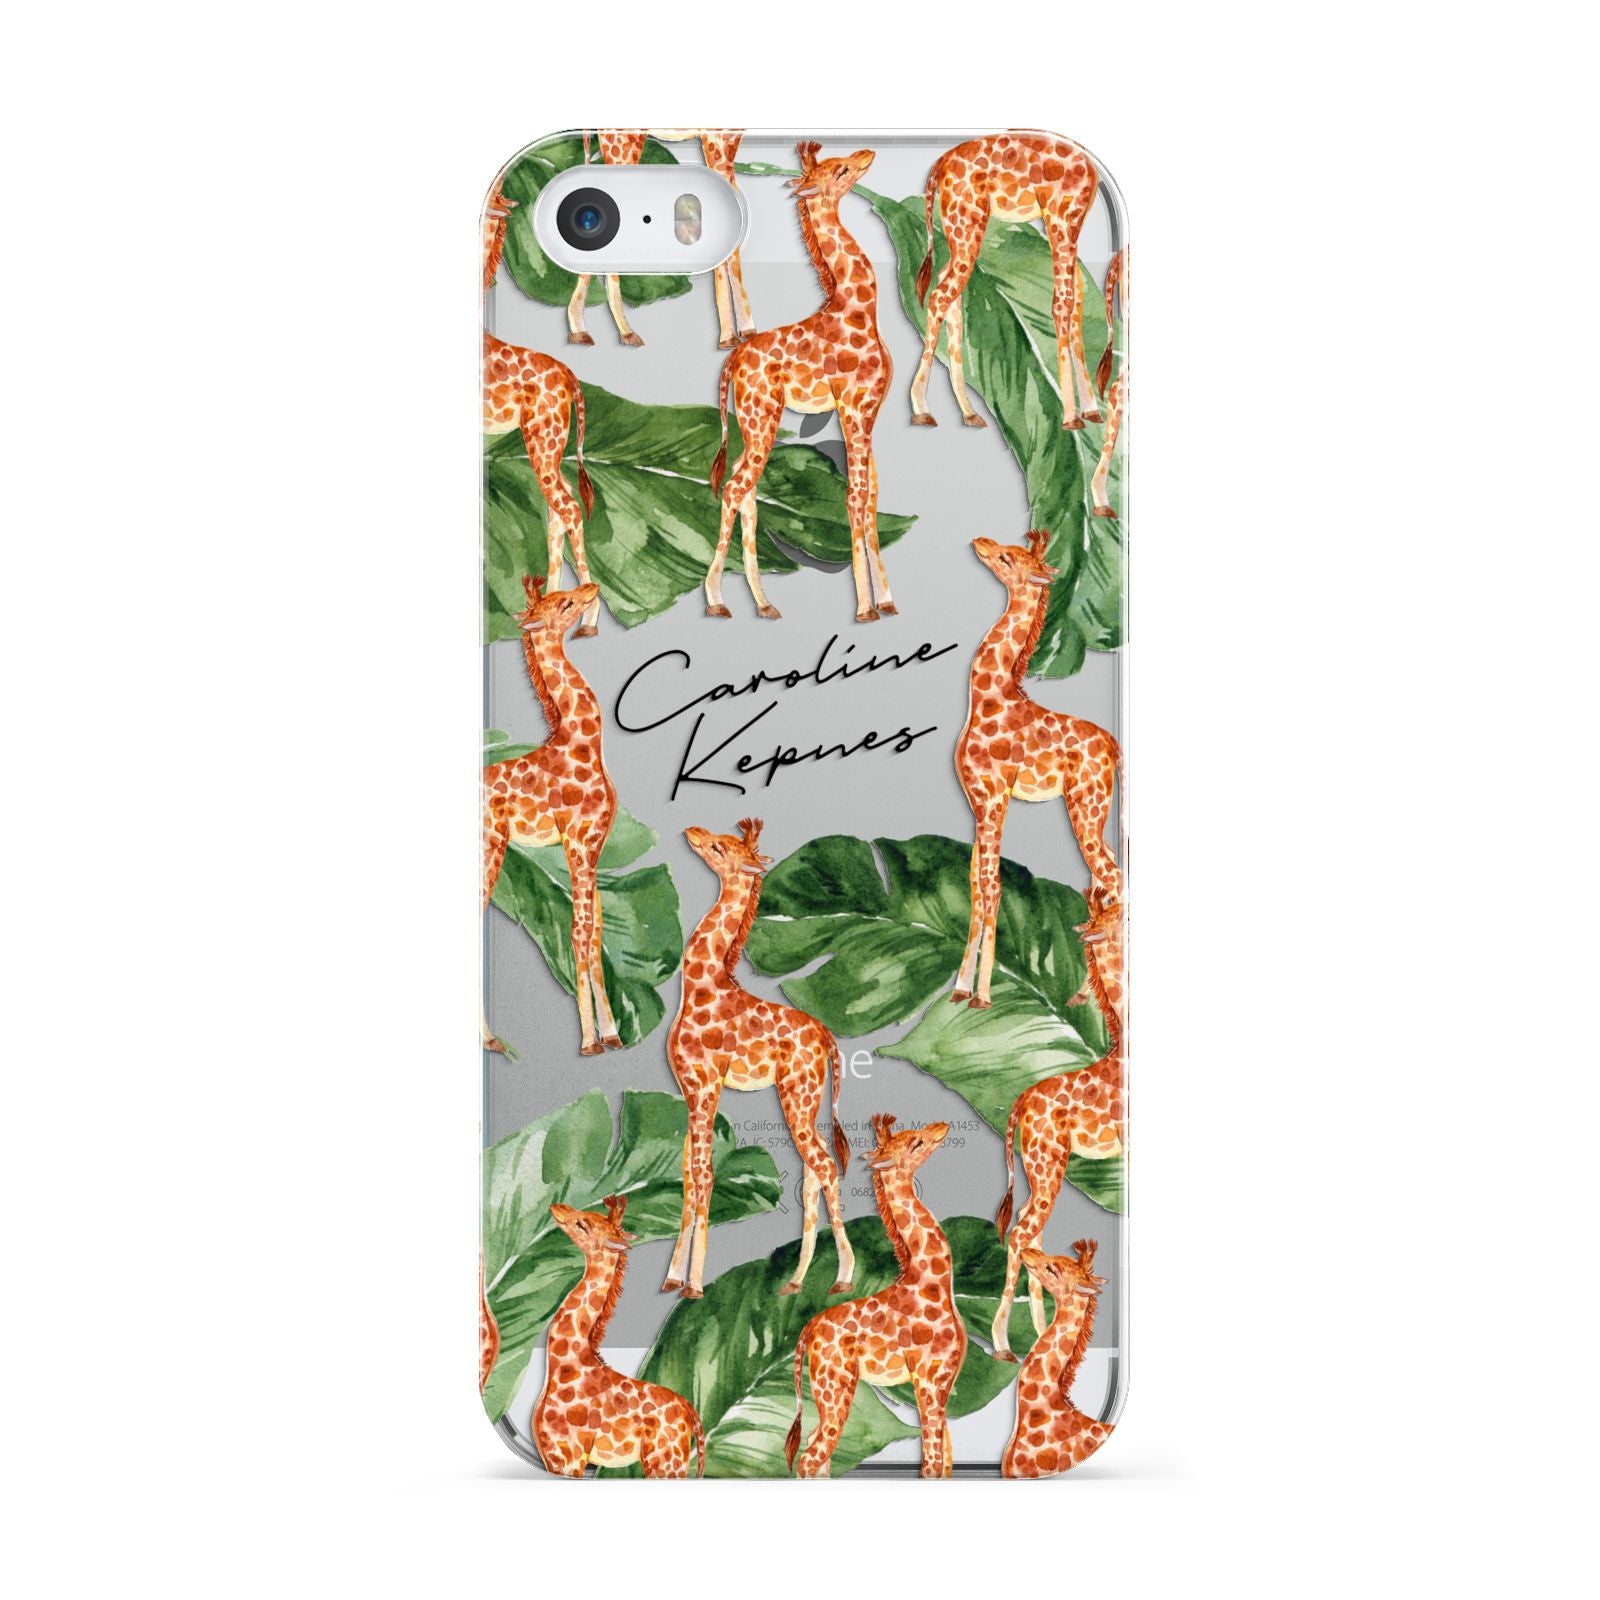 Personalised Giraffes Apple iPhone 5 Case